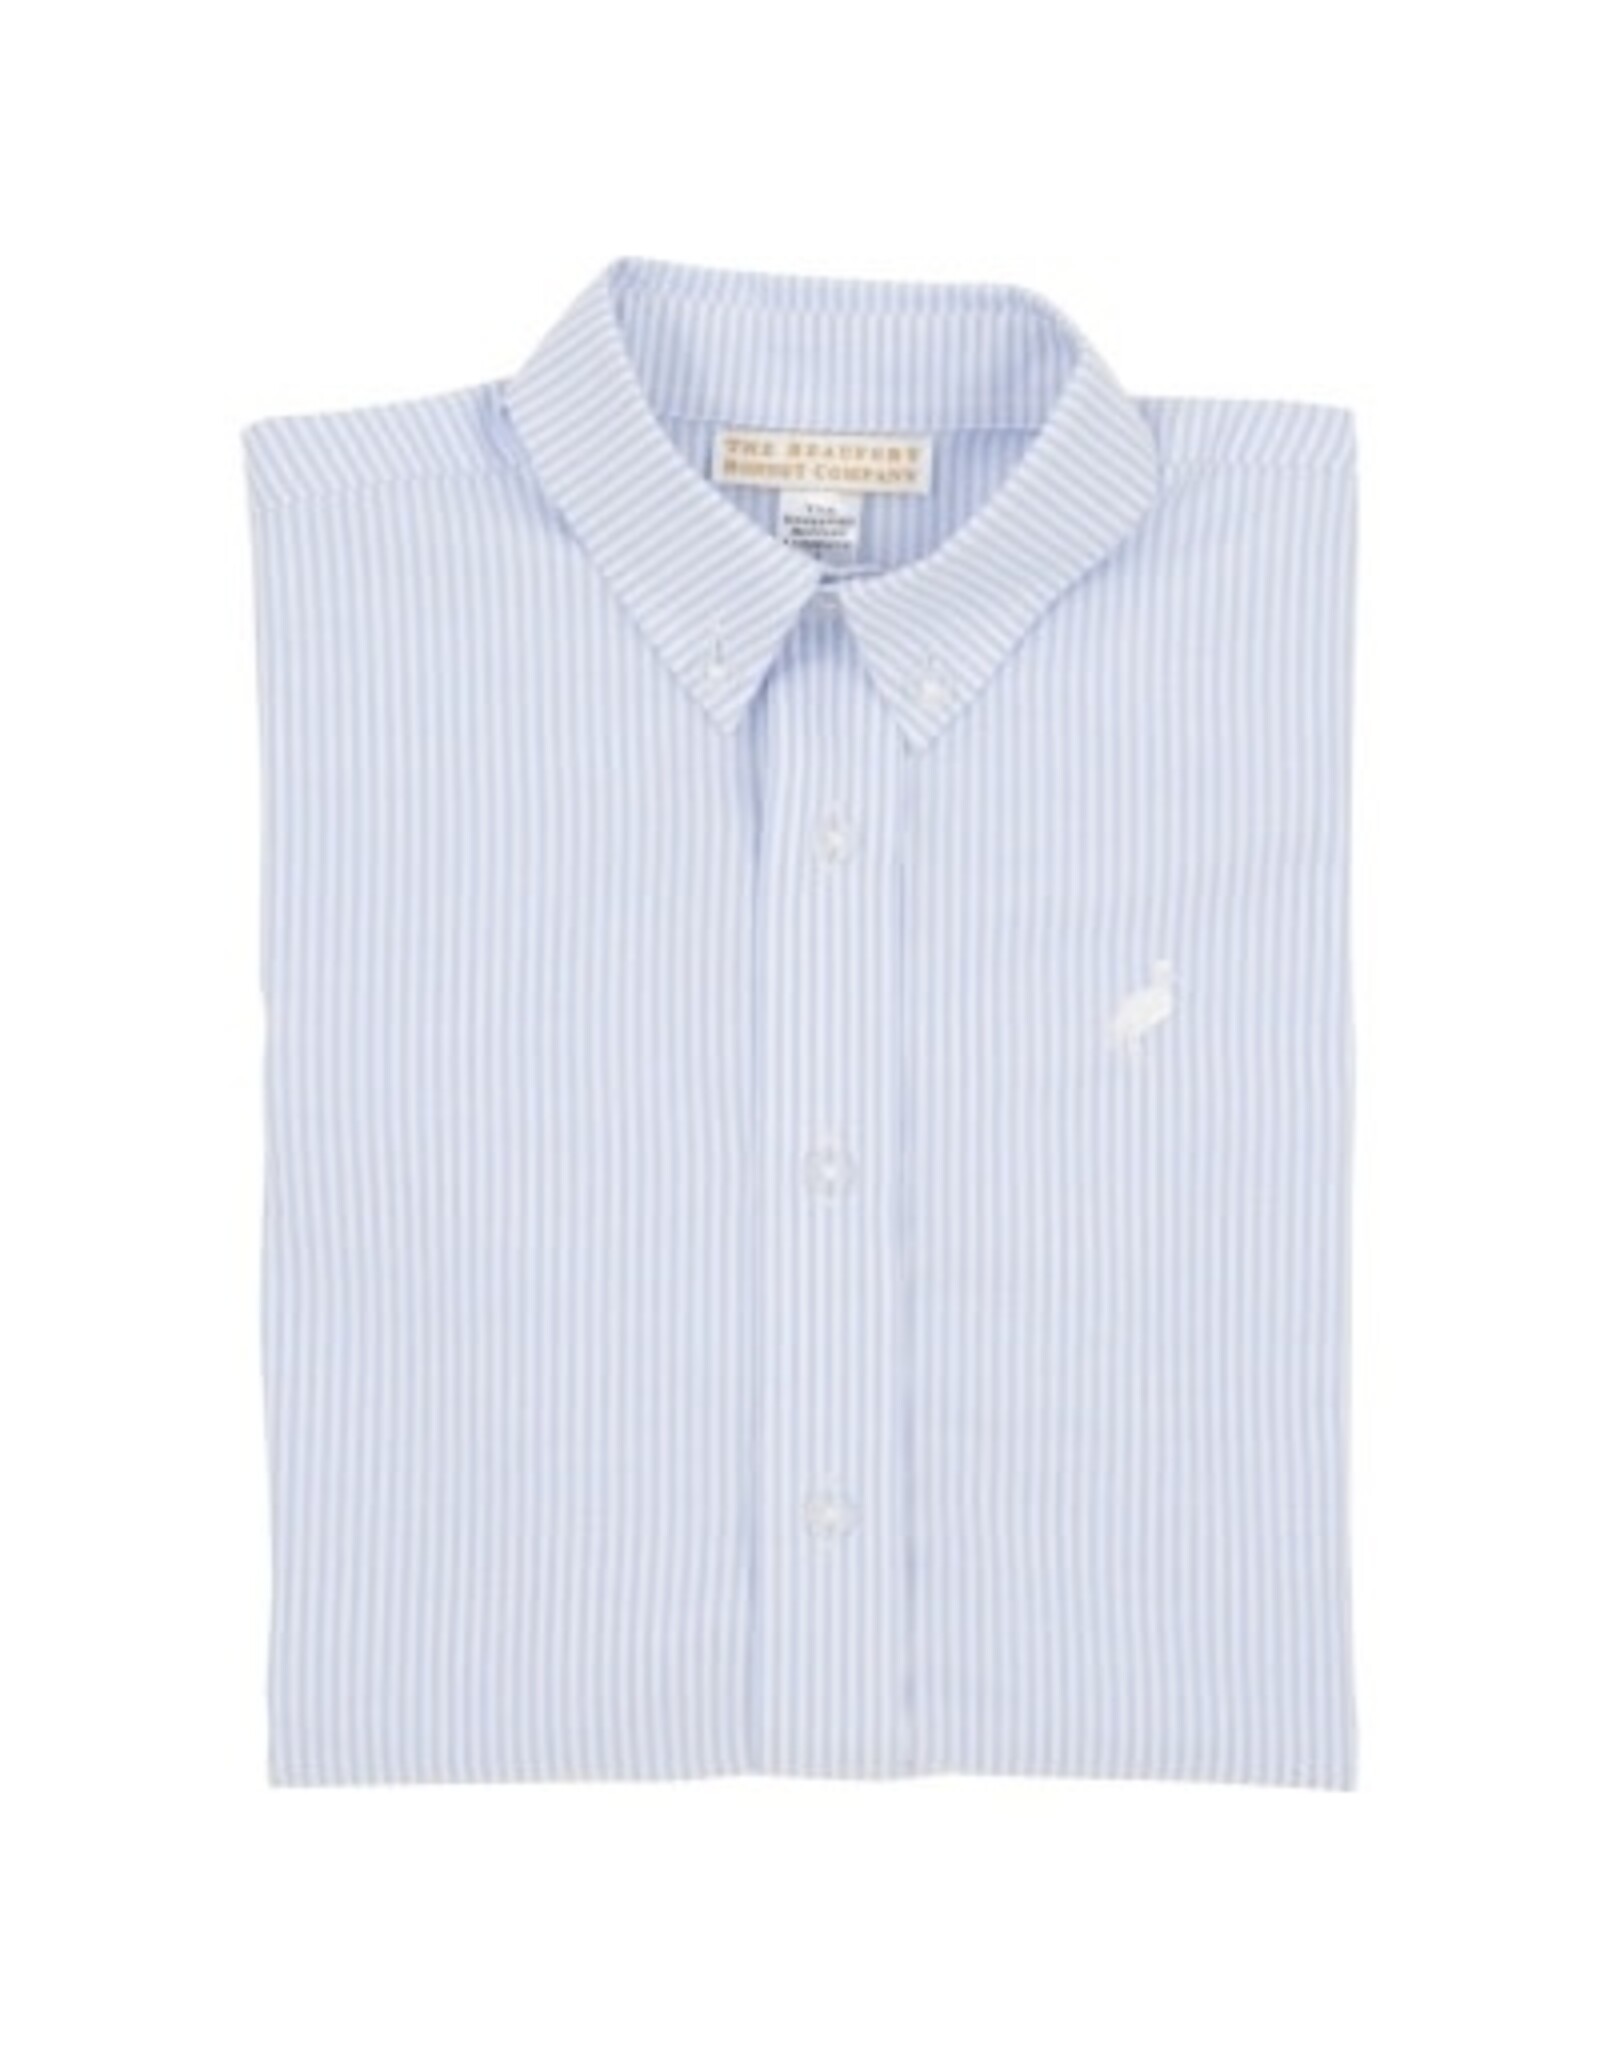 The Beaufort Bonnet Company Dean's List Dress Shirt Oxford Blue Stripe